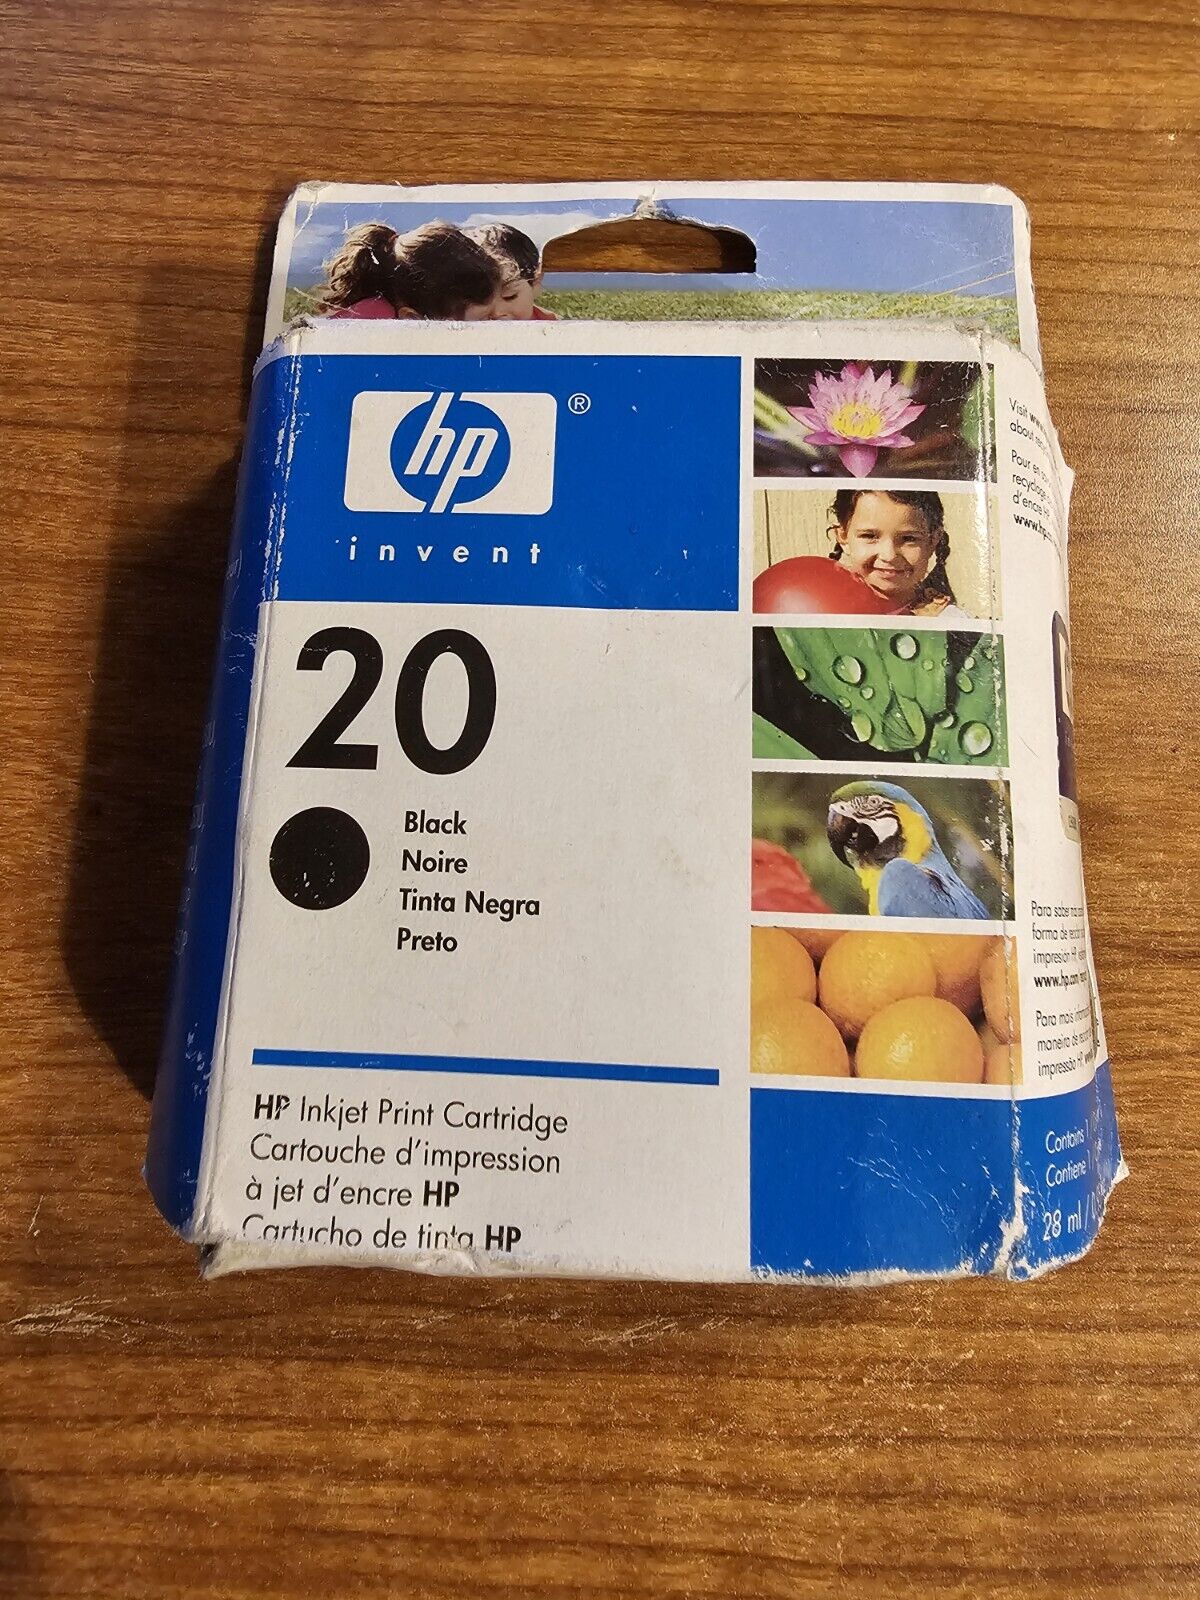 Hewlett-Packard HP 20 Inkjet Black Ink Print Cartridge EXP 03/2008 Expired